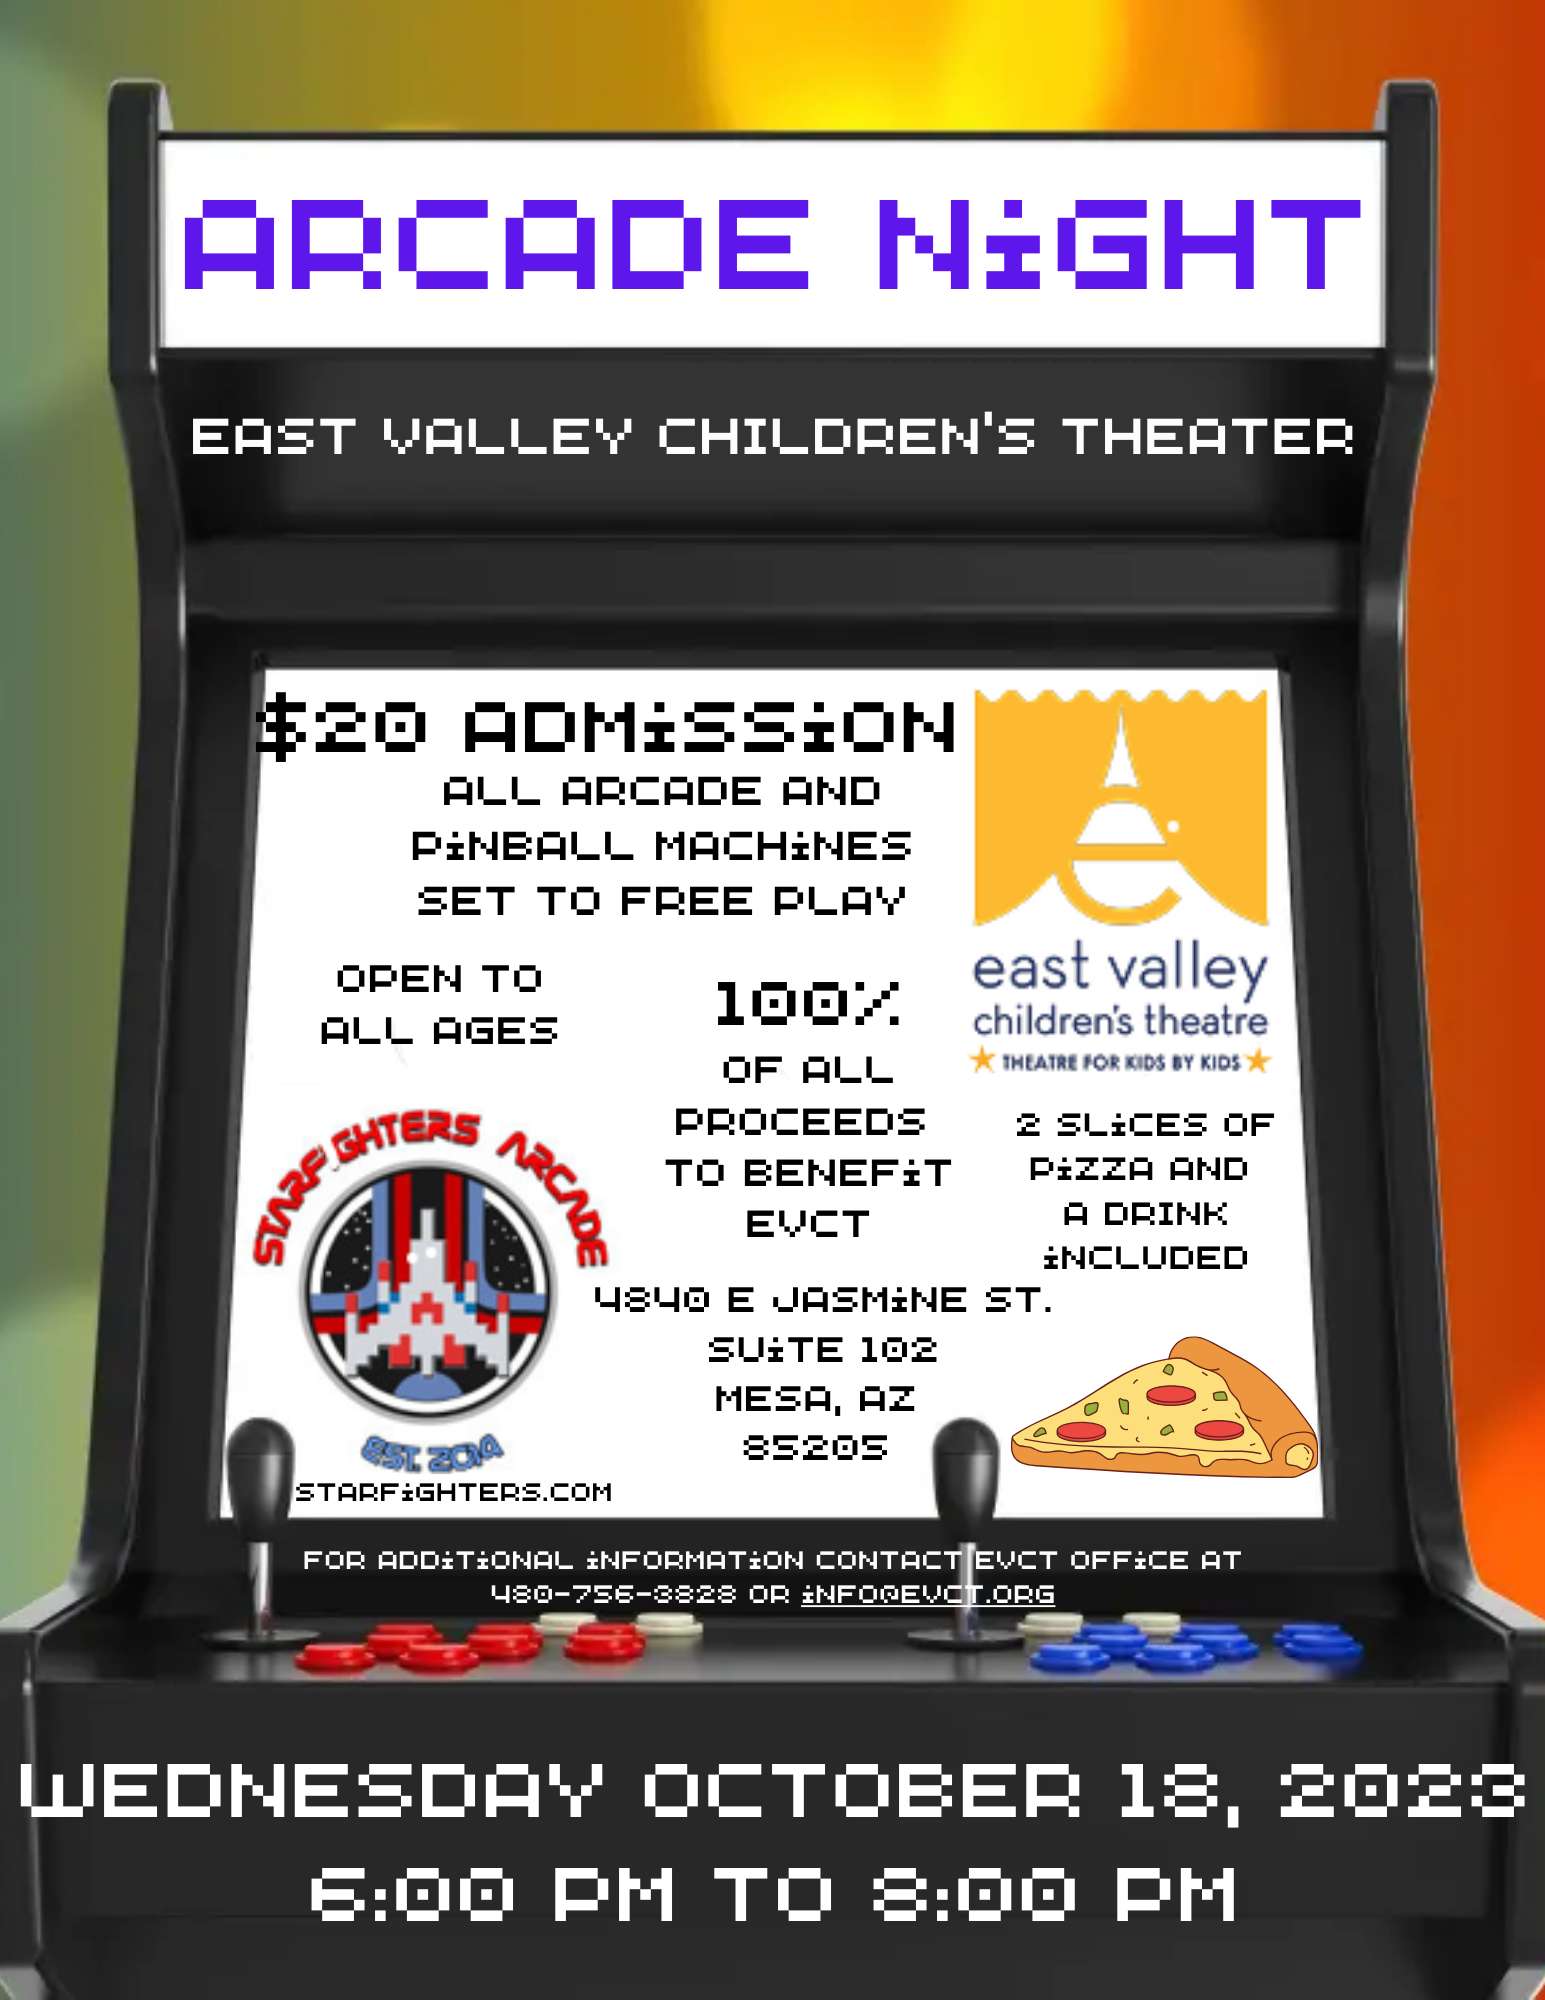 Family Night at Starfighter Arcade Oct 18 6 pm